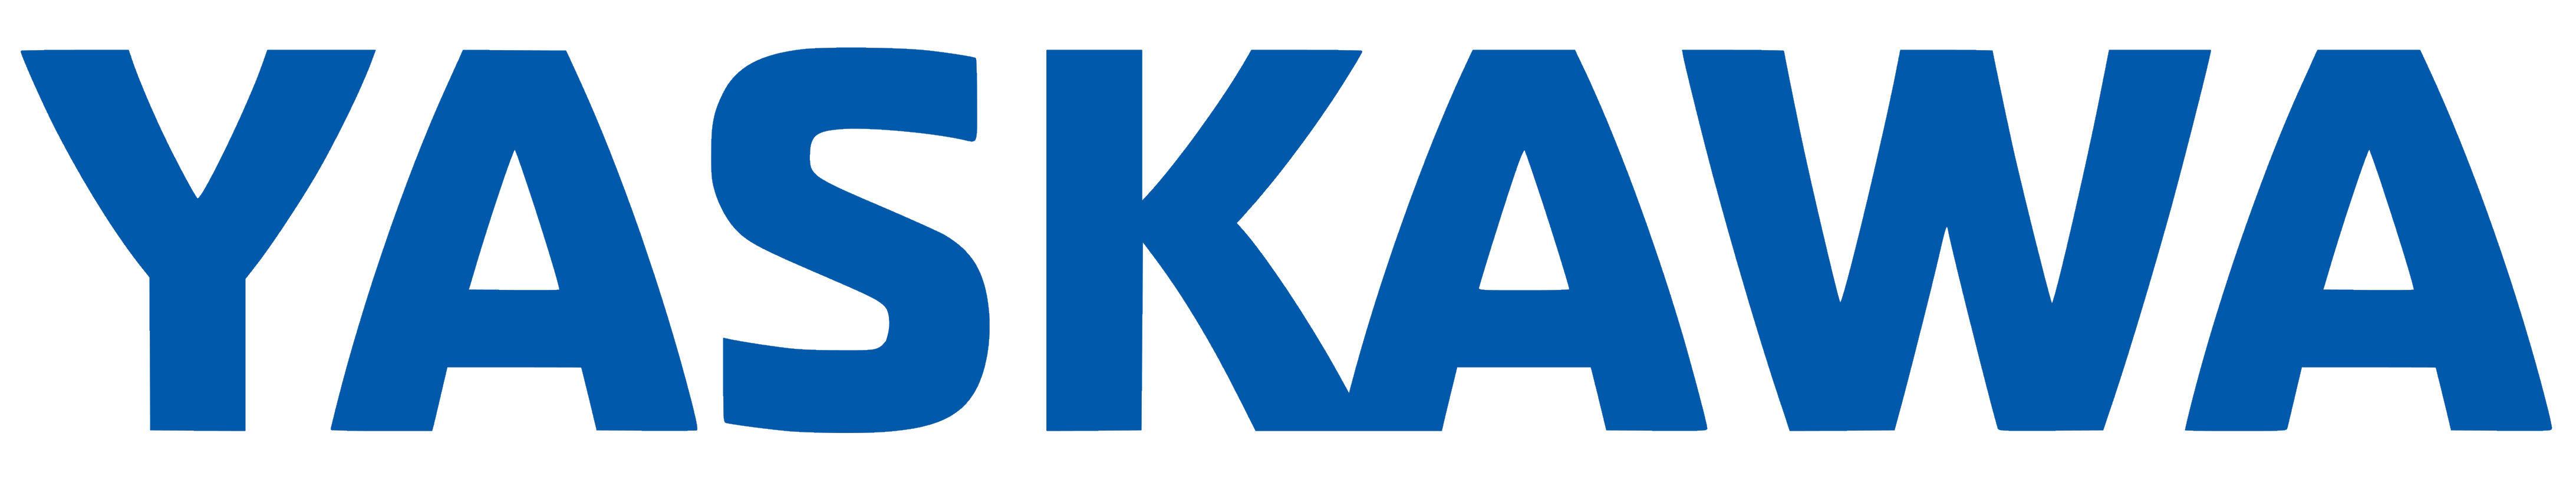 Yaskawa logo, logotype